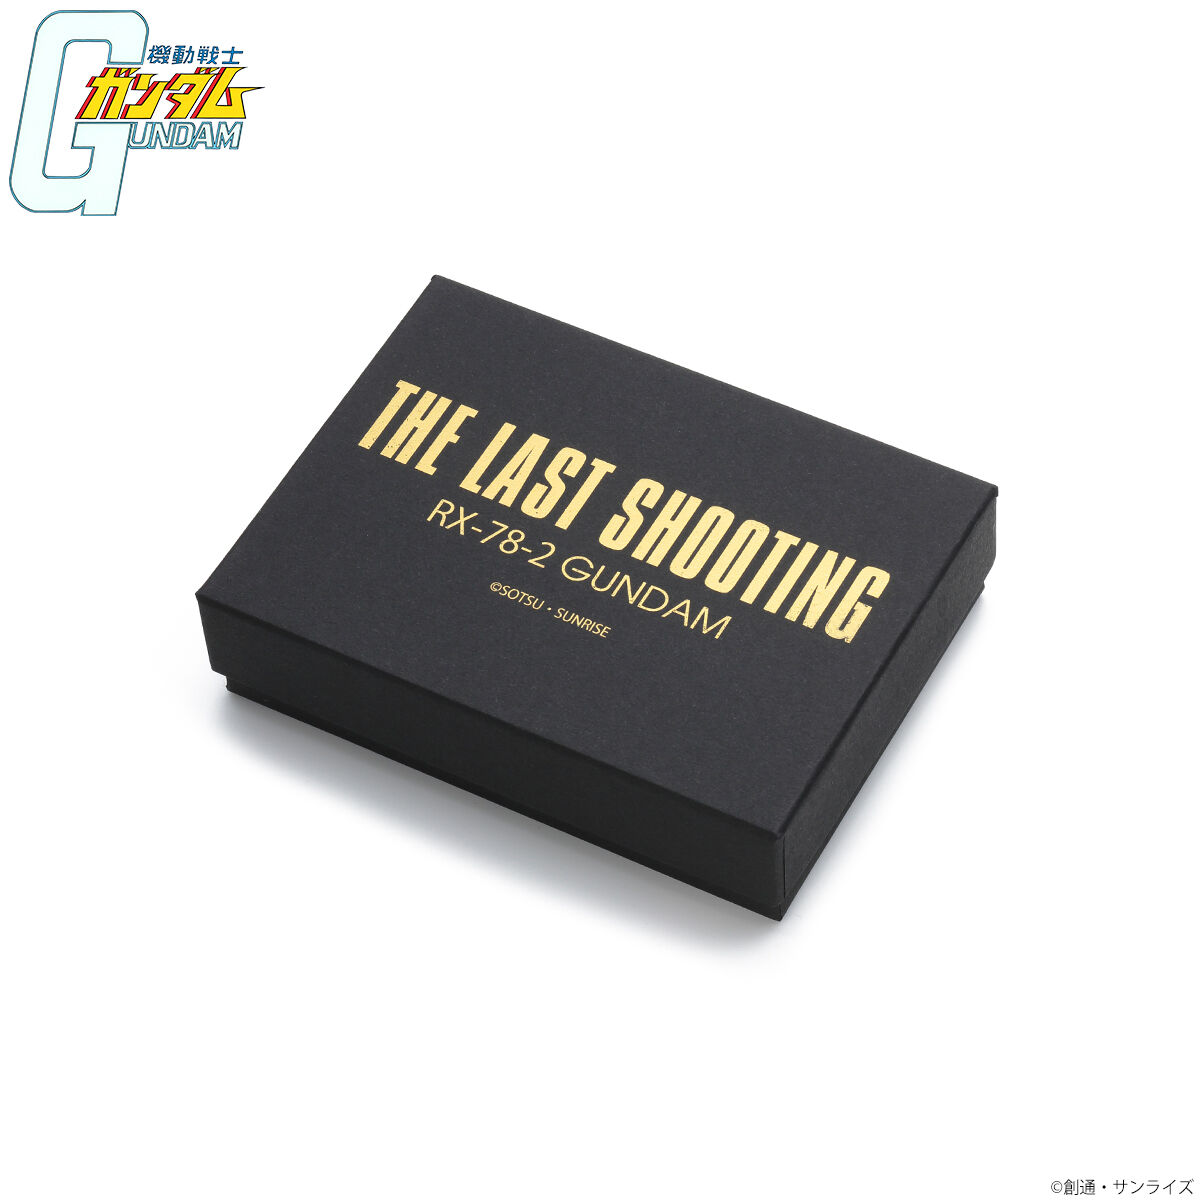 Mobile Suit Gundam The Last Shooting Business Card Case